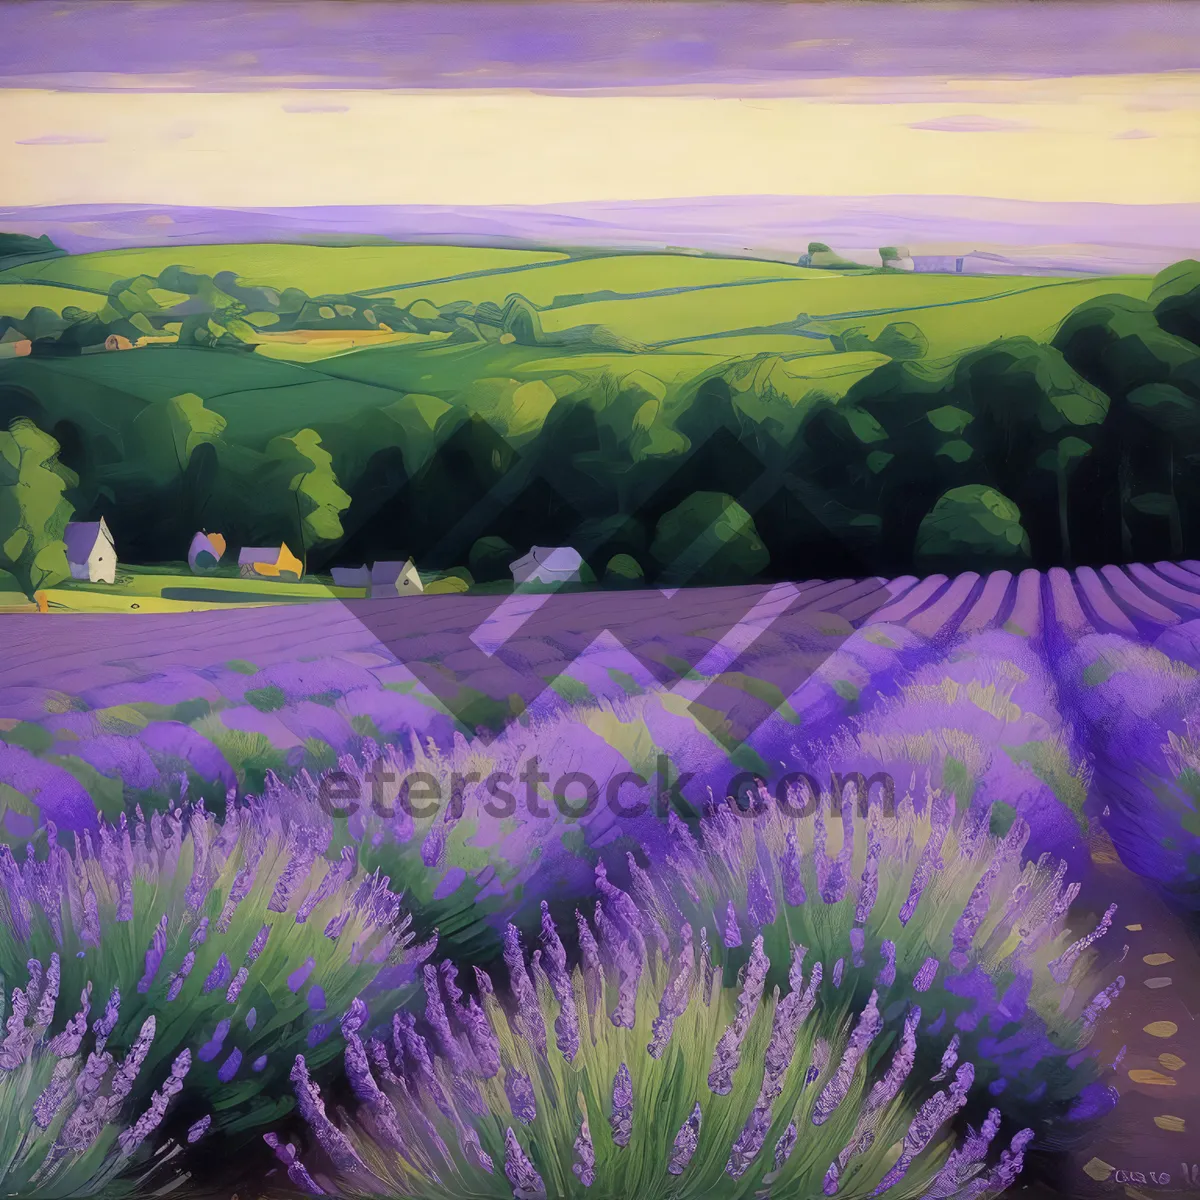 Picture of Vibrant Aquatic Lavender Field Under Sunny Sky